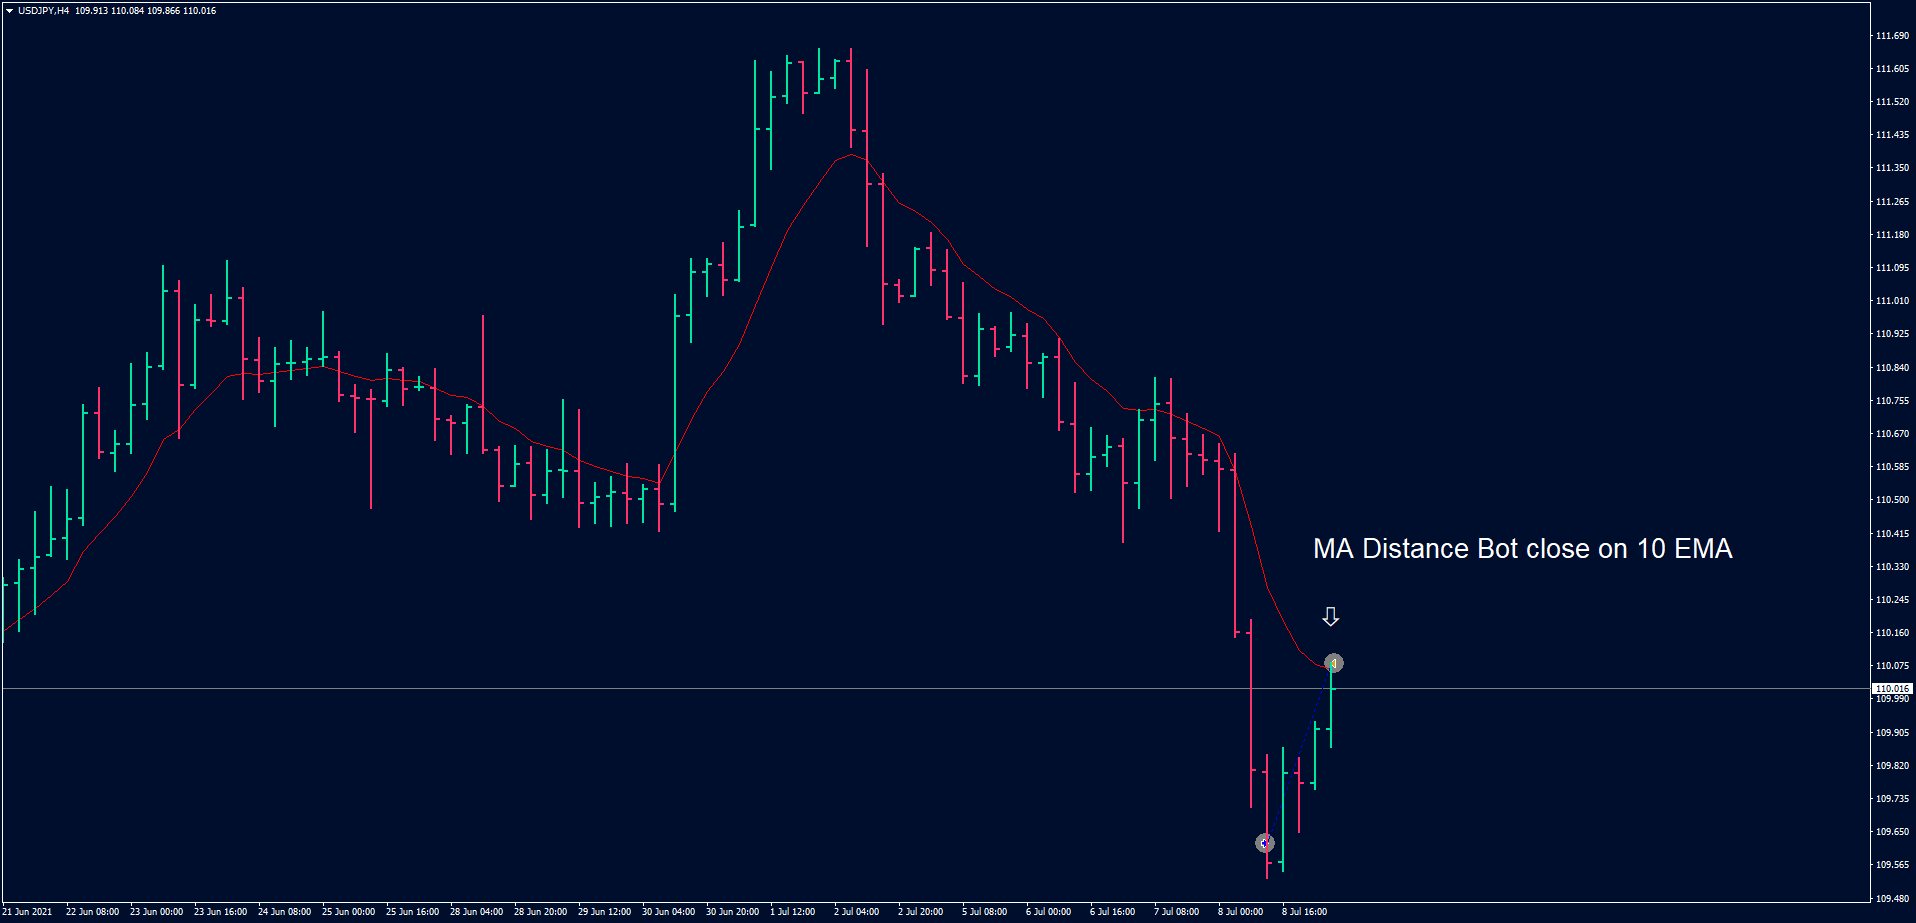 USD/JPY H4 chart